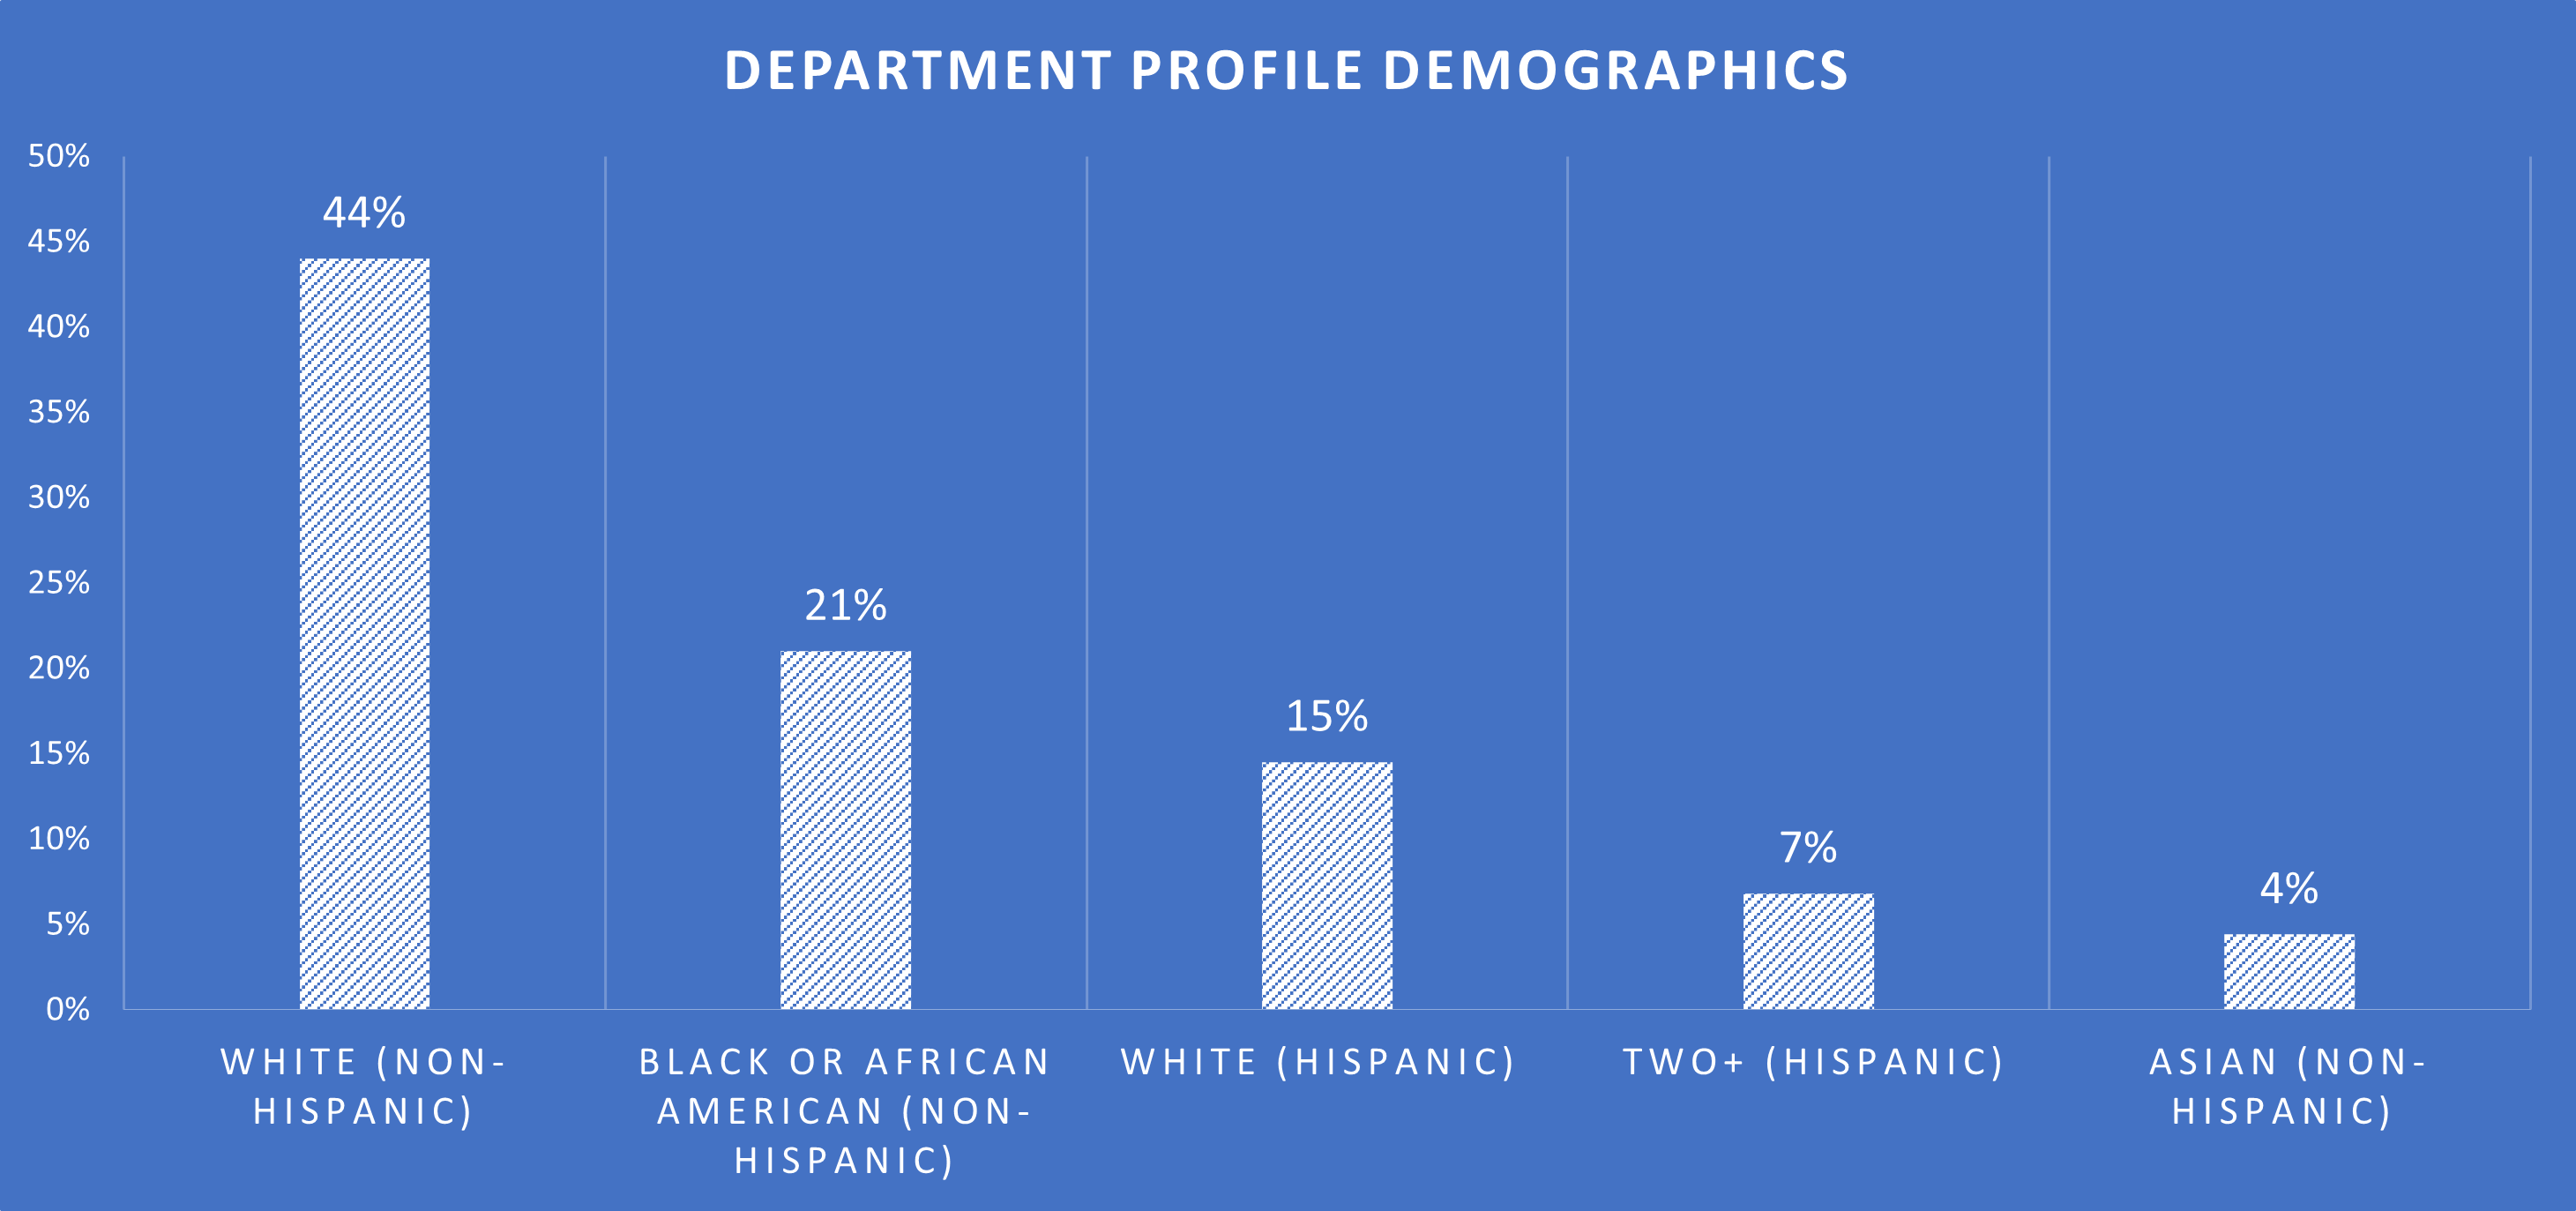 Tampa Police Department Demographics